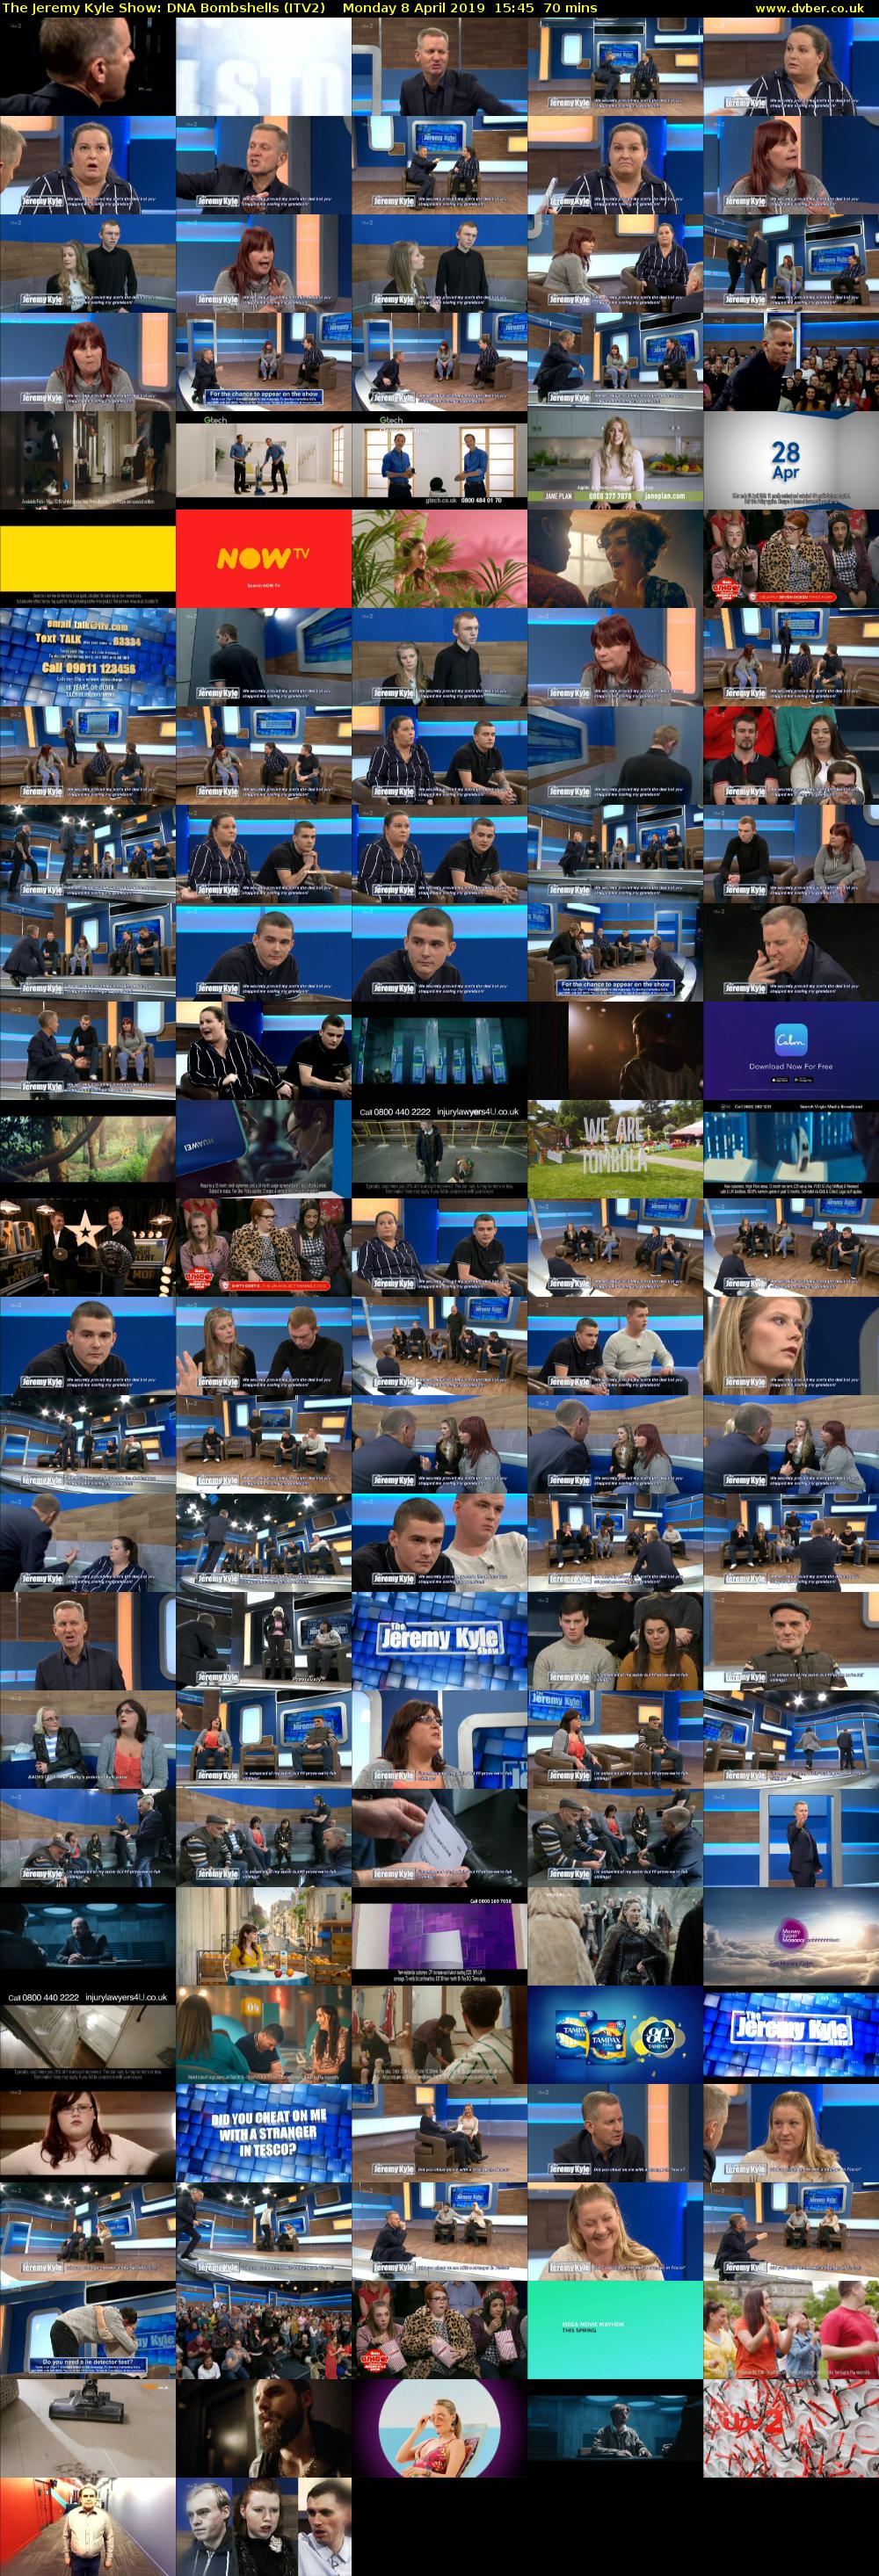 The Jeremy Kyle Show: DNA Bombshells (ITV2) Monday 8 April 2019 15:45 - 16:55